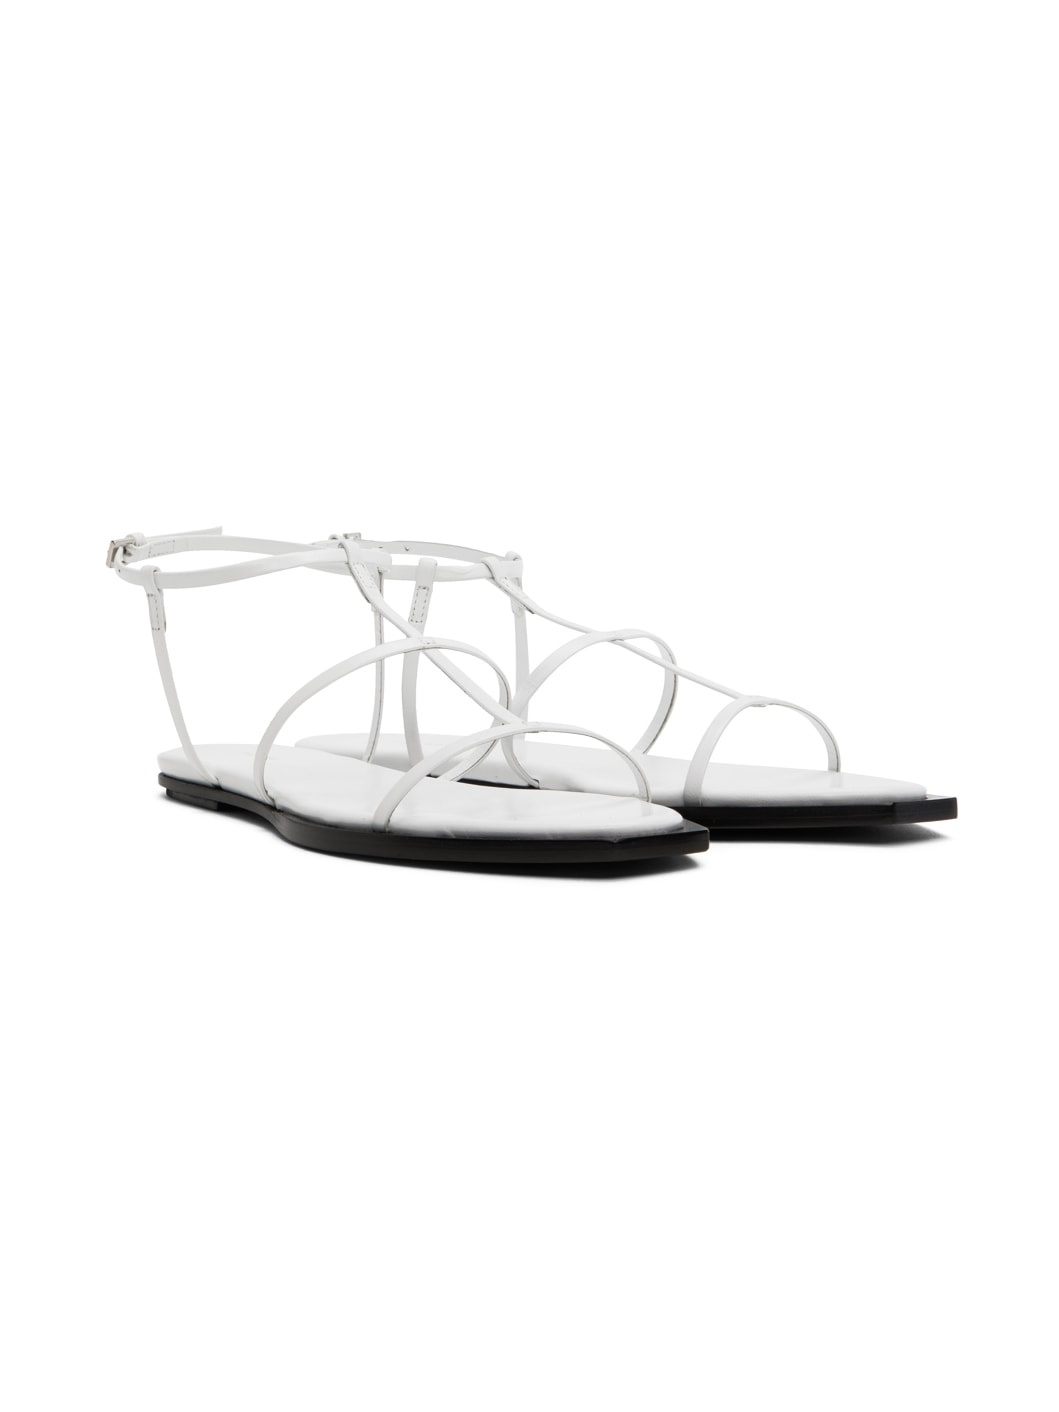 White T Bar Flat Sandals - 4